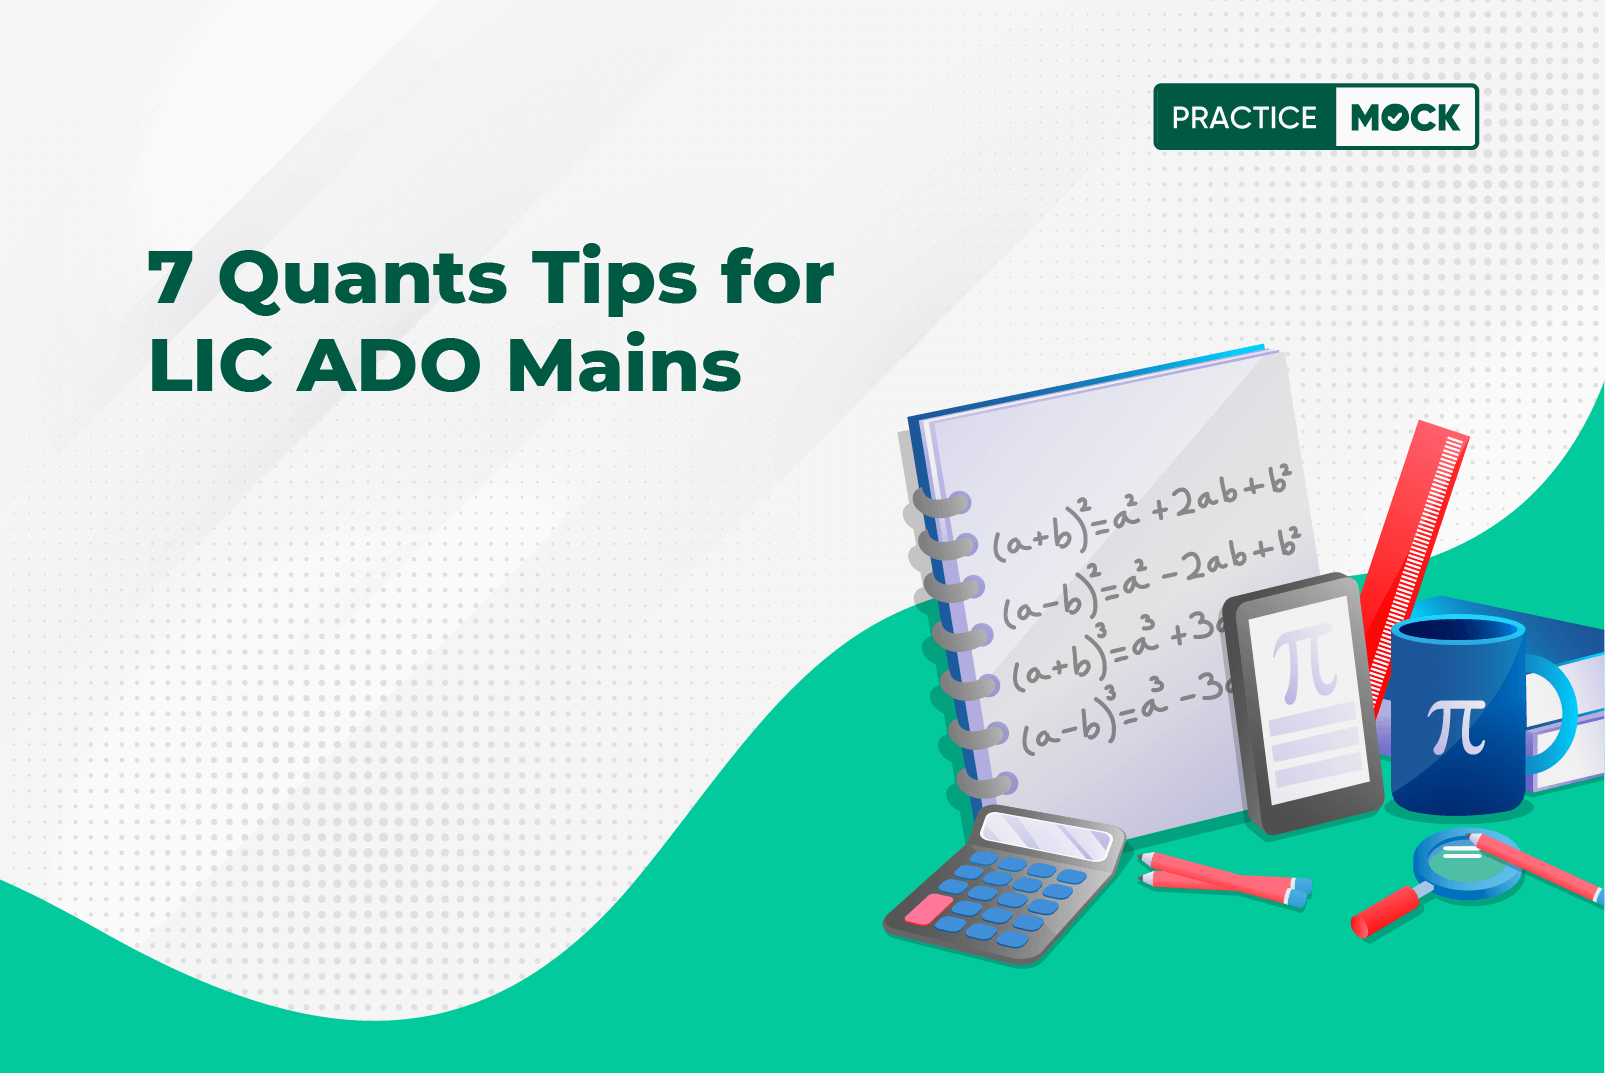 7 Quants Tips for LIC ADO Mains